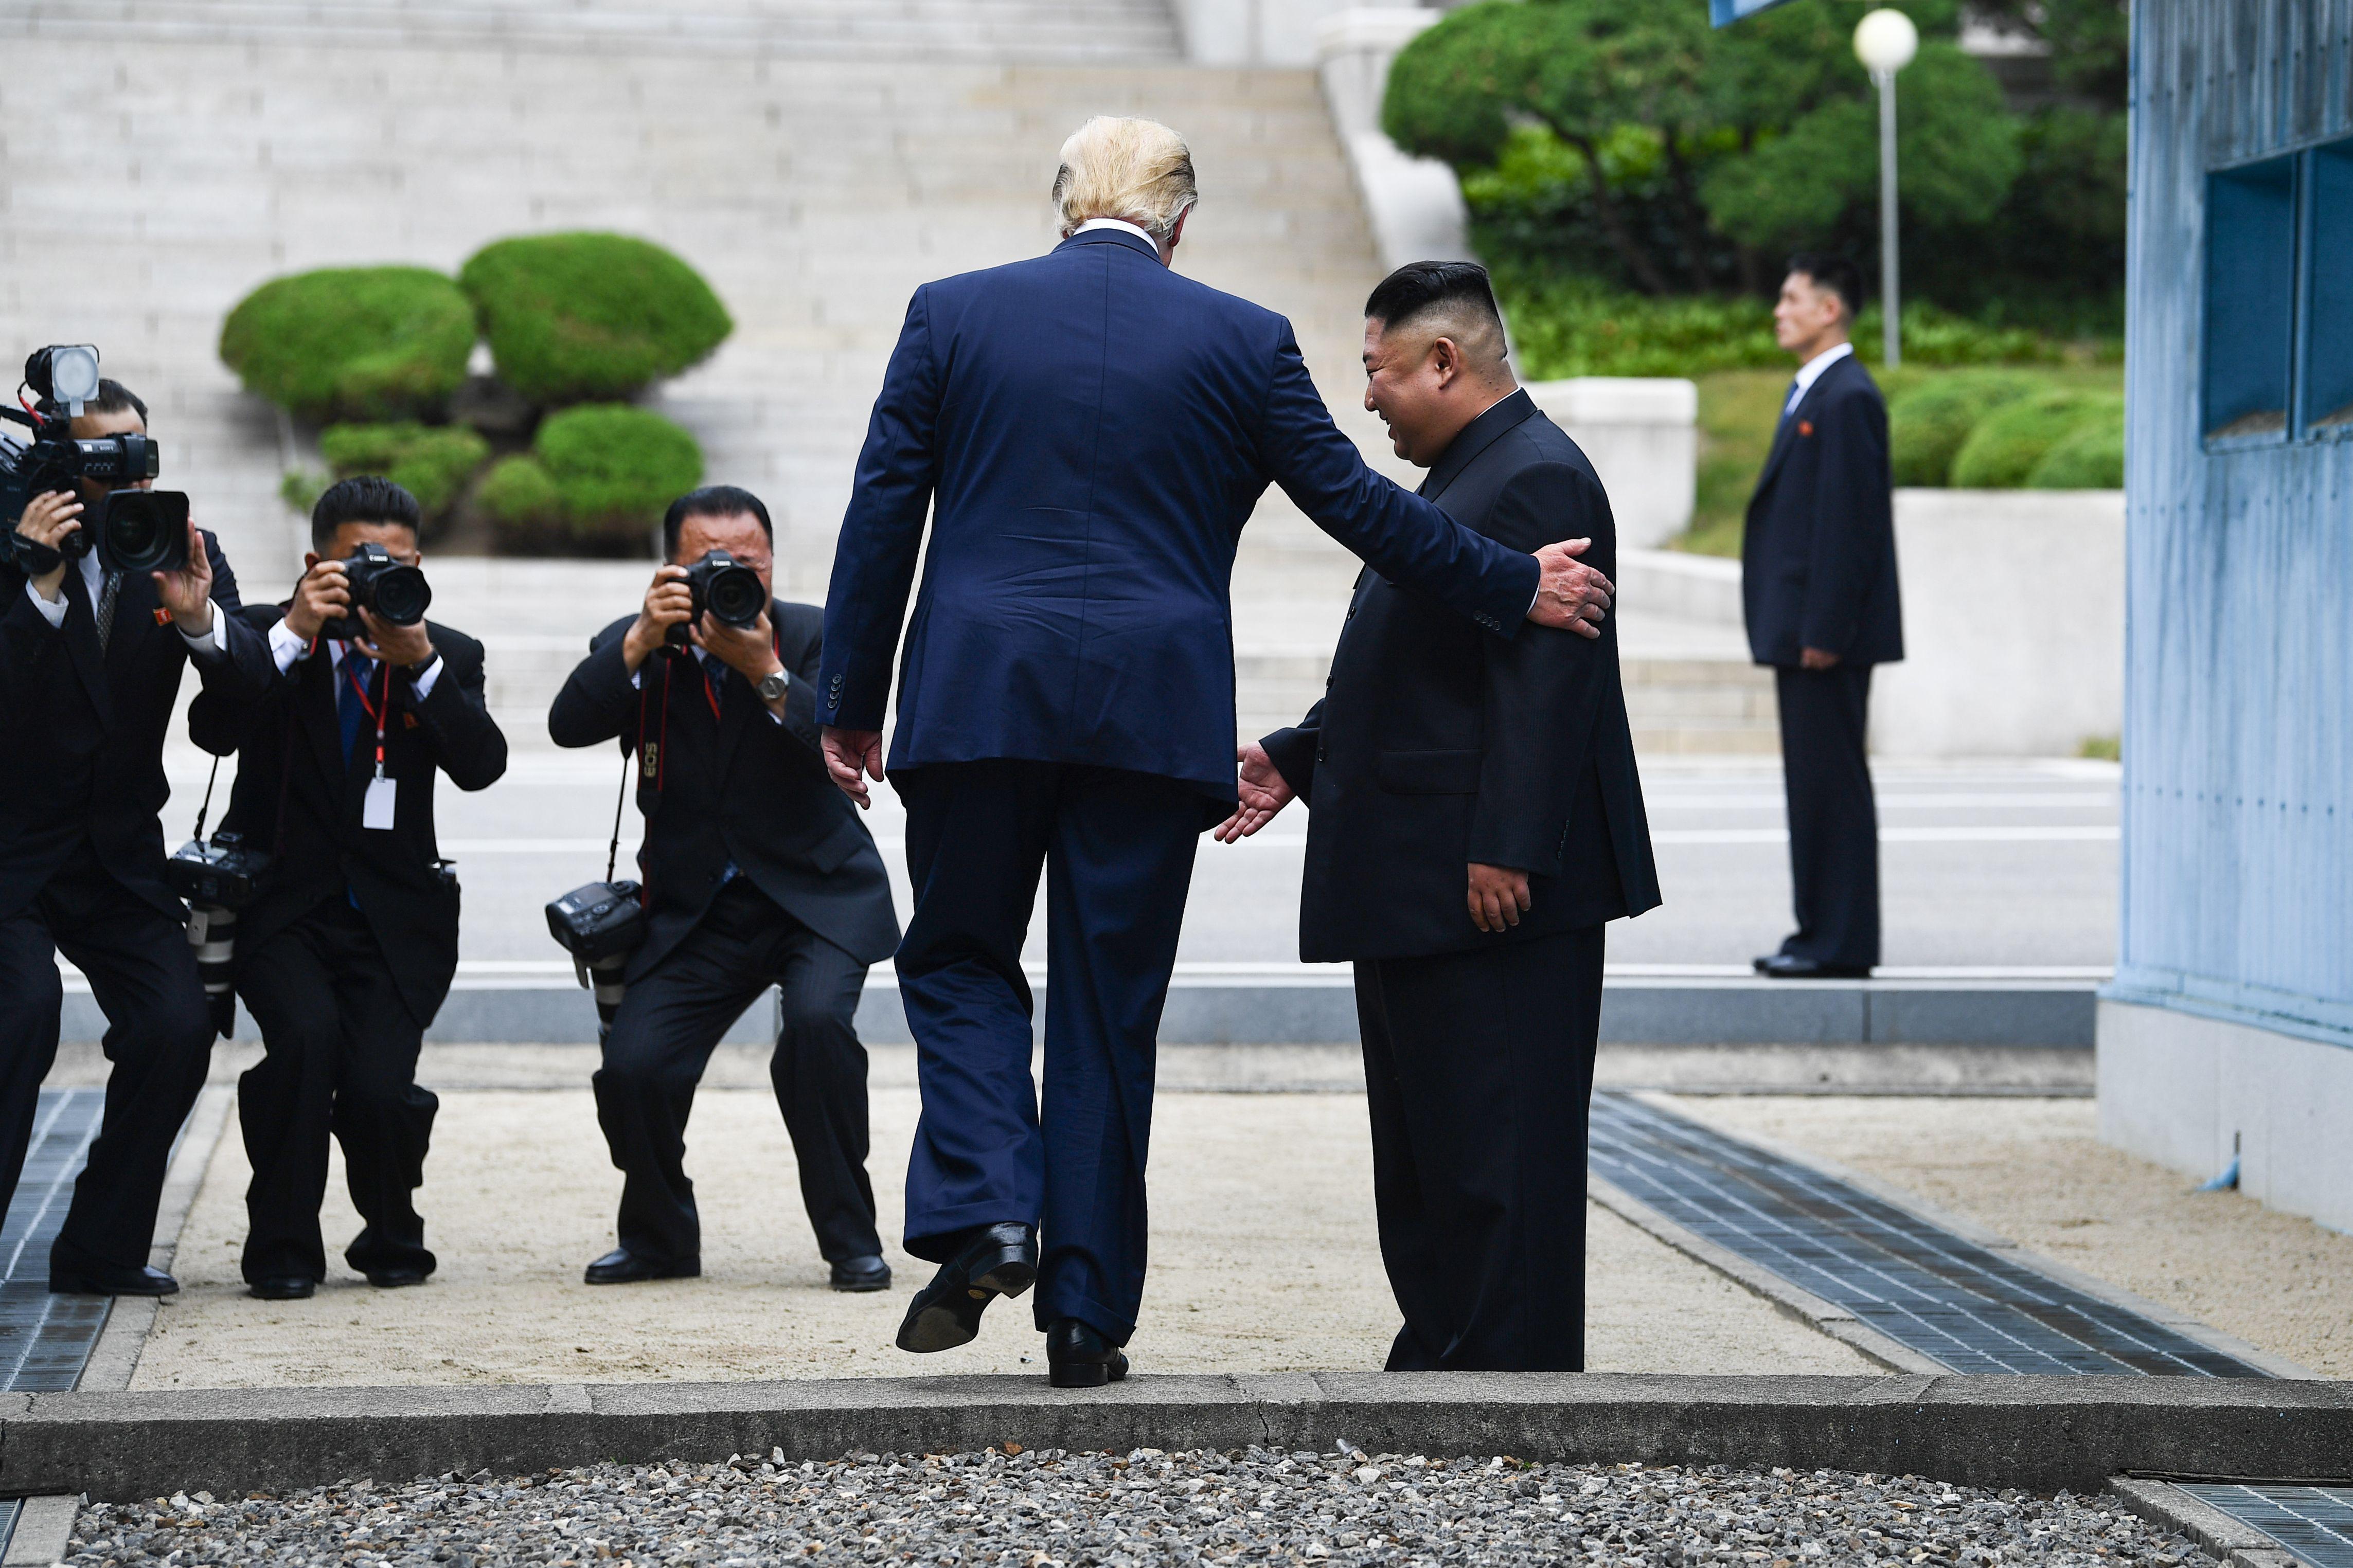 Trump walks across the border as Kim looks on.